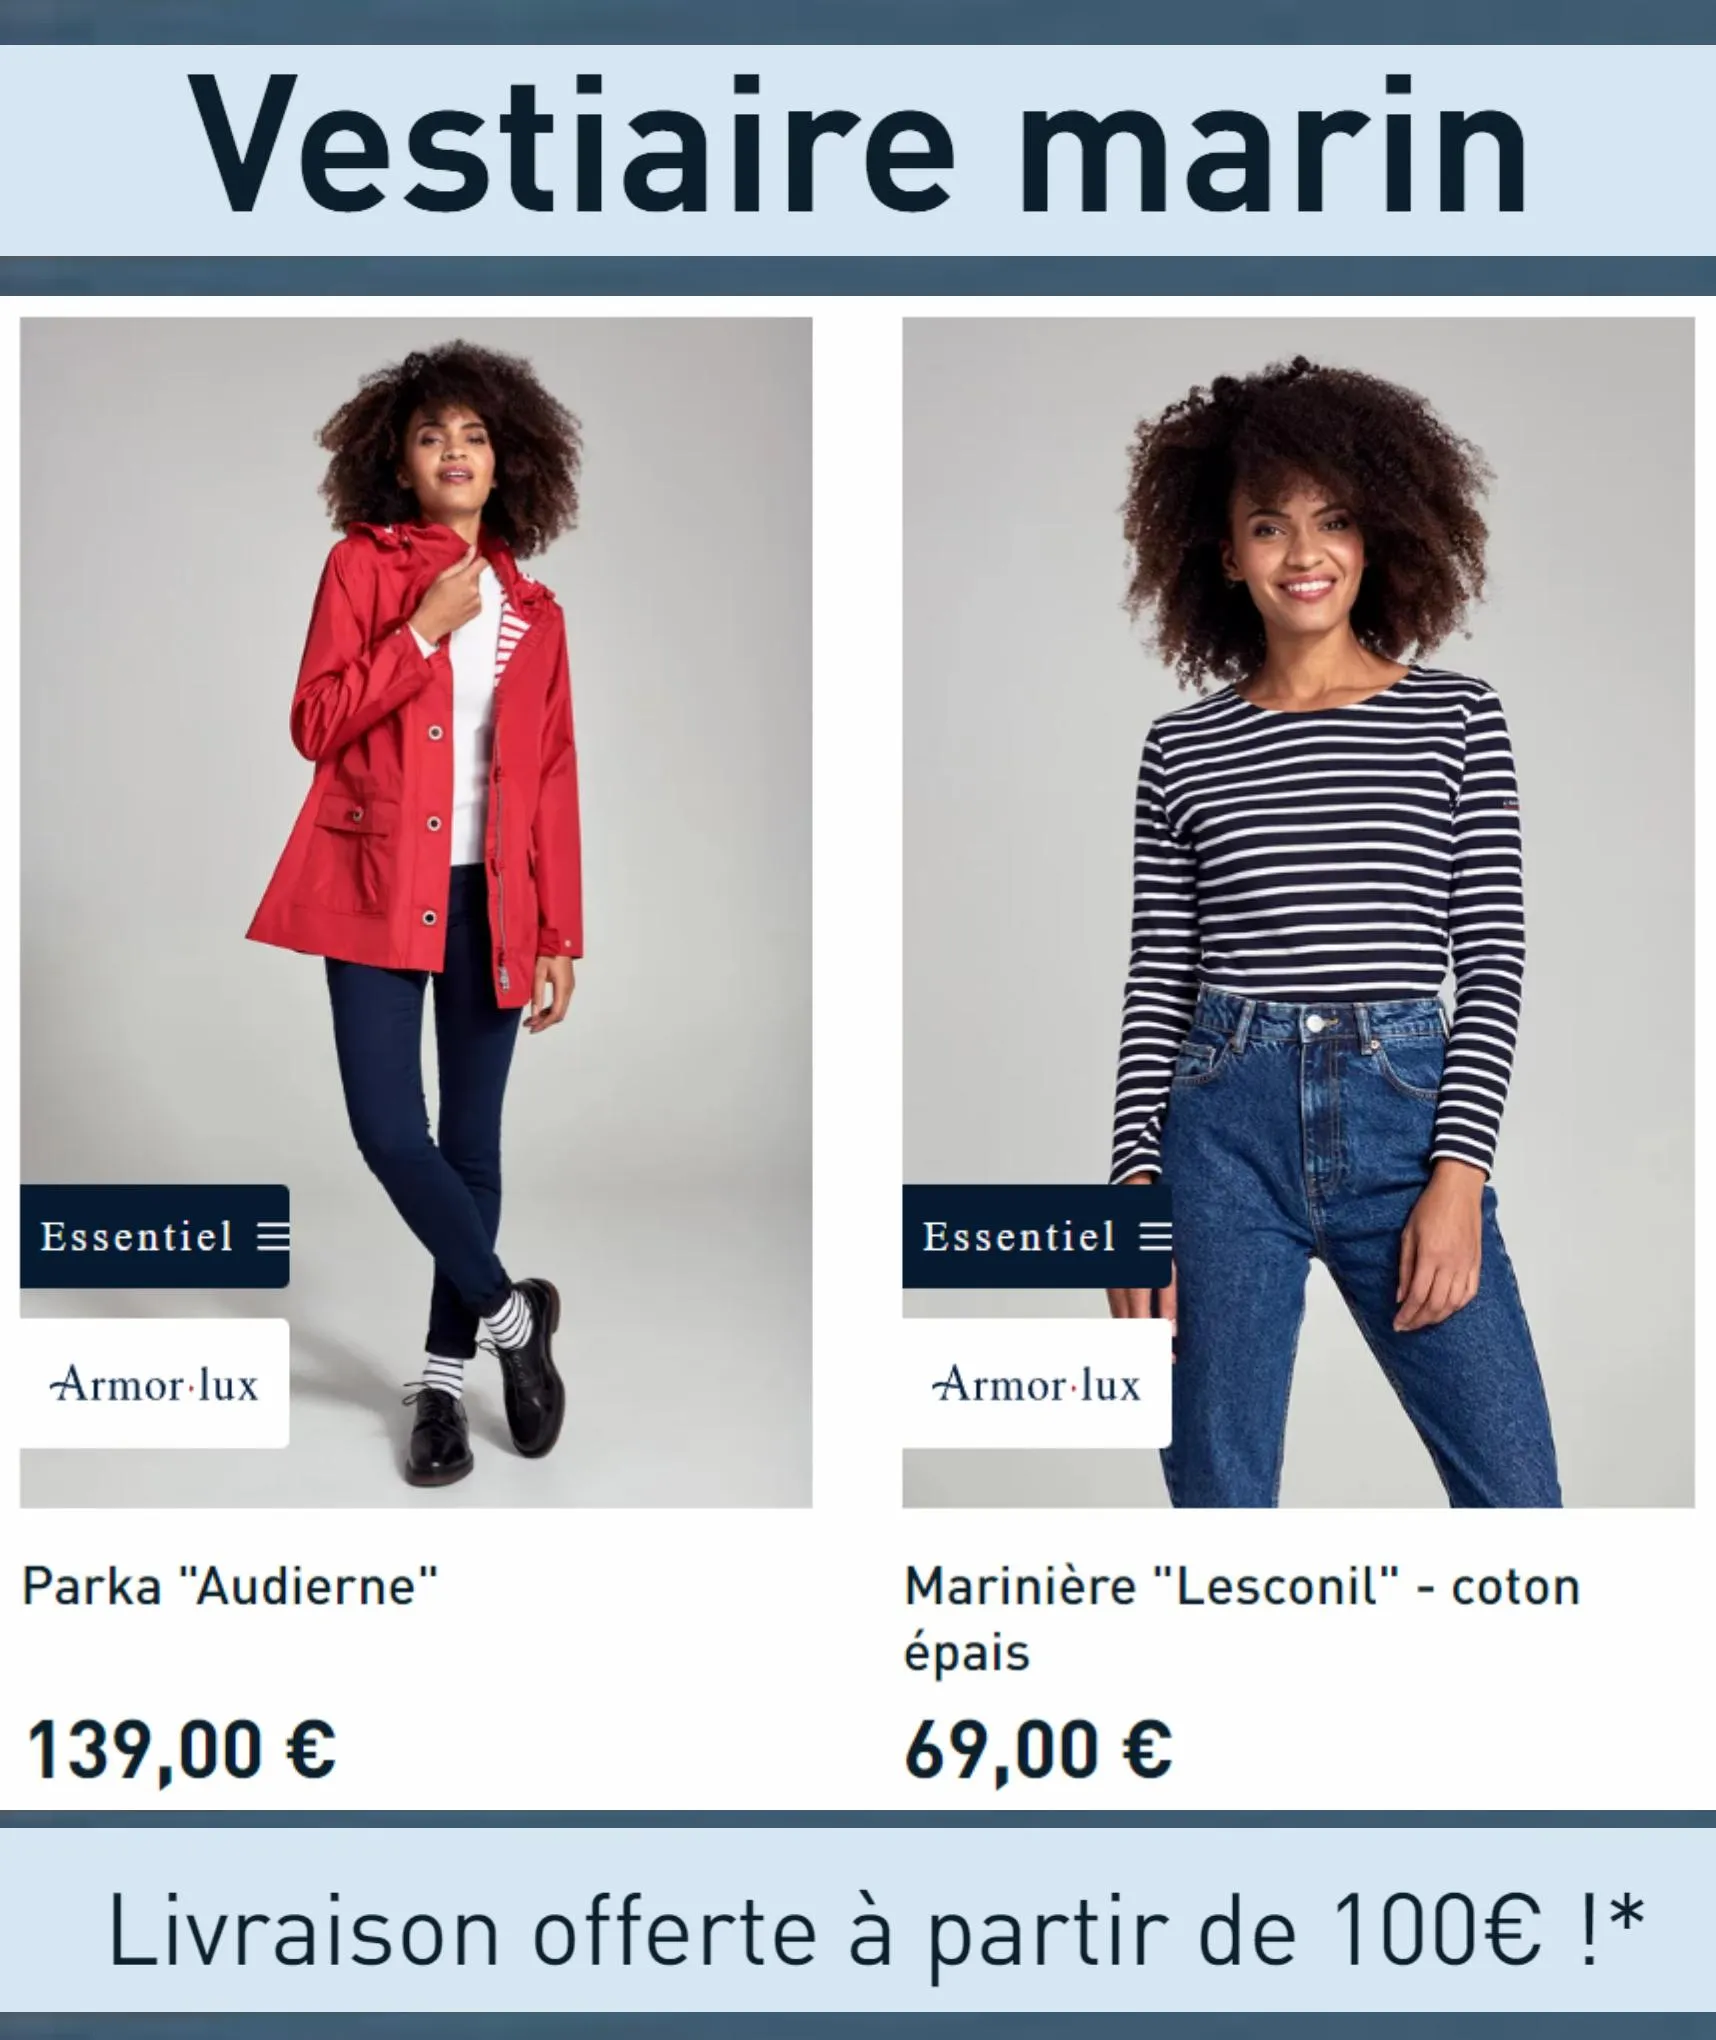 Catalogue Vestiare Marin, page 00005